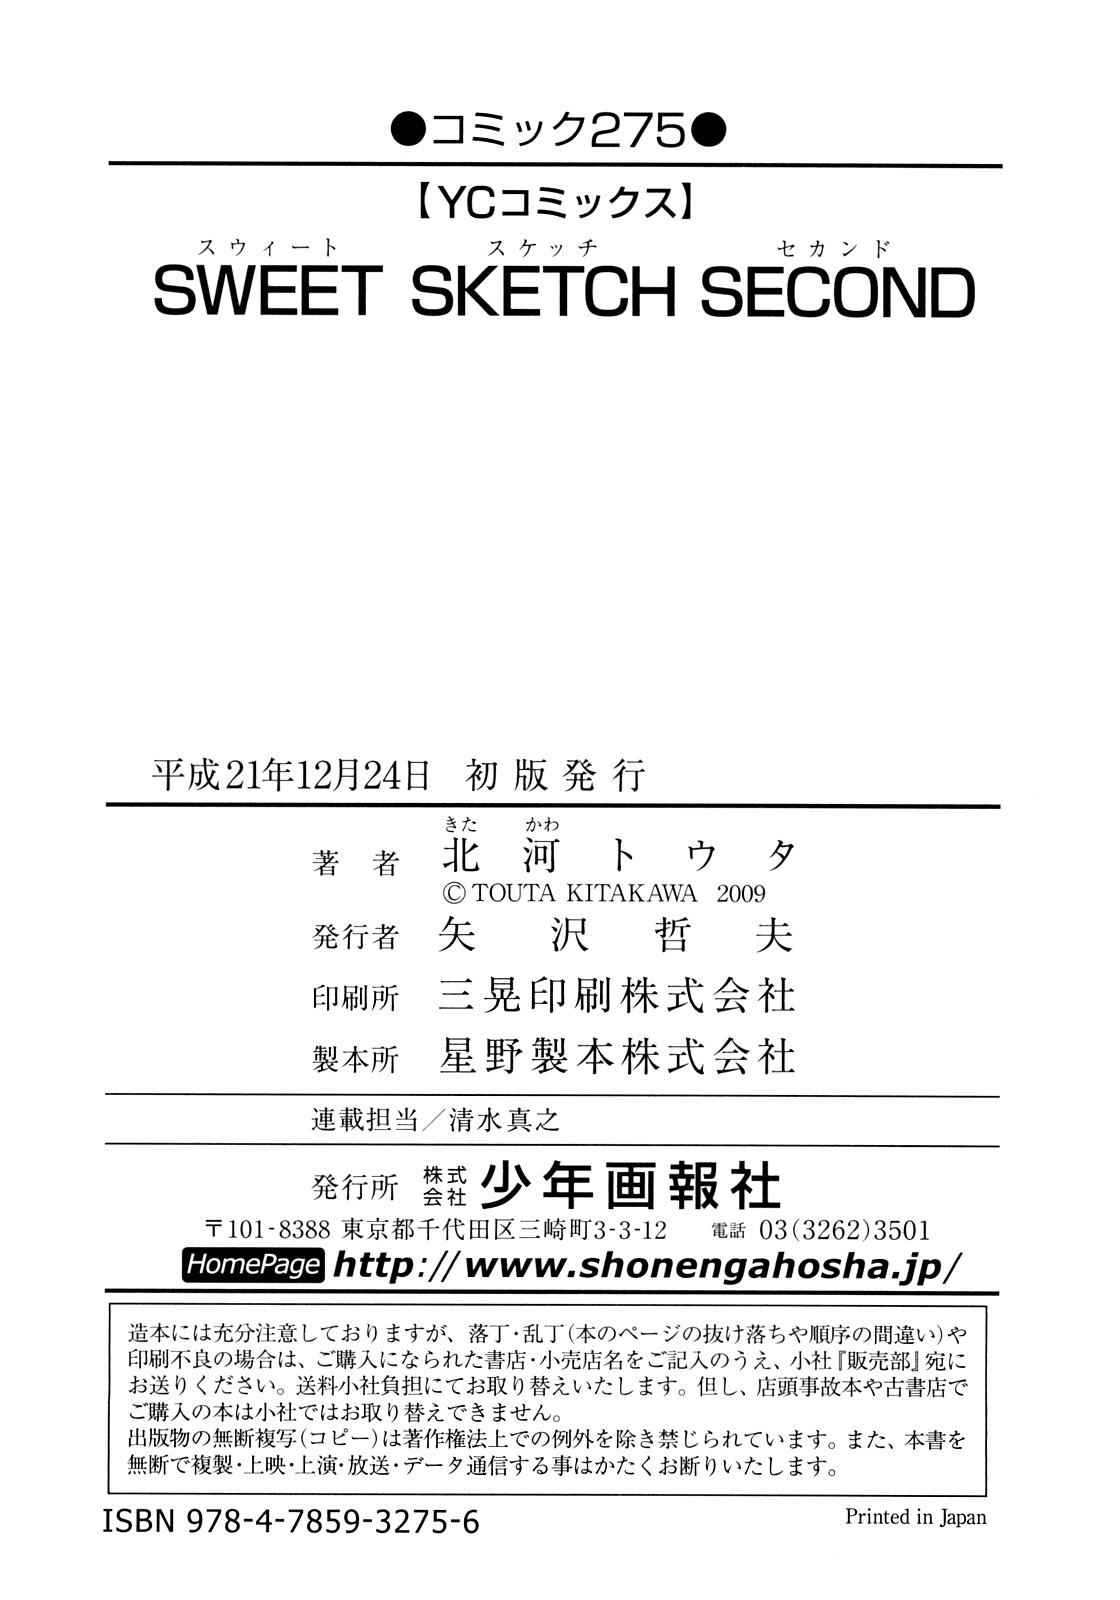 Sweet Sketch Second 130